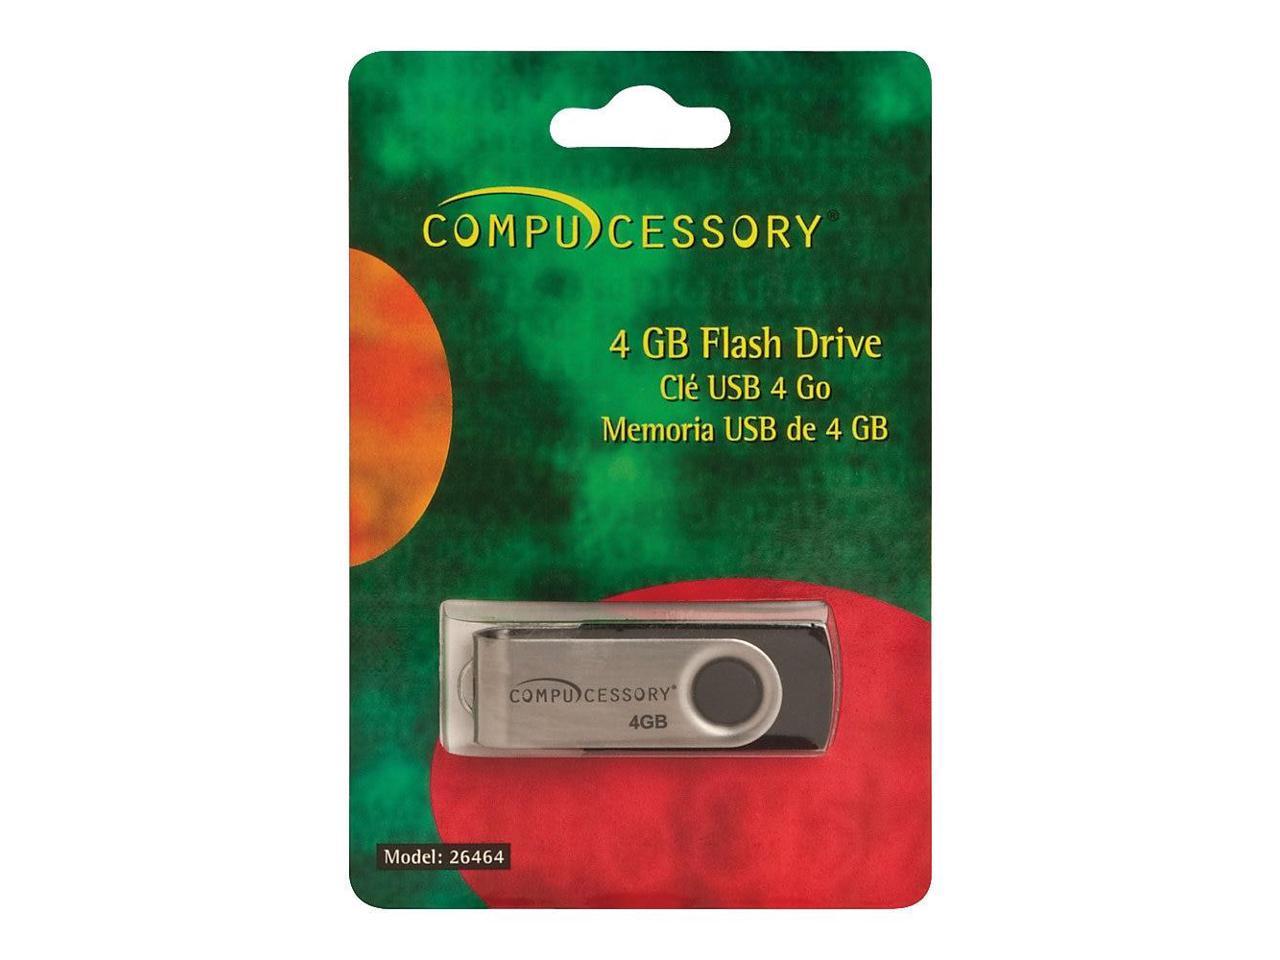 Compucessory 4GB.jpg